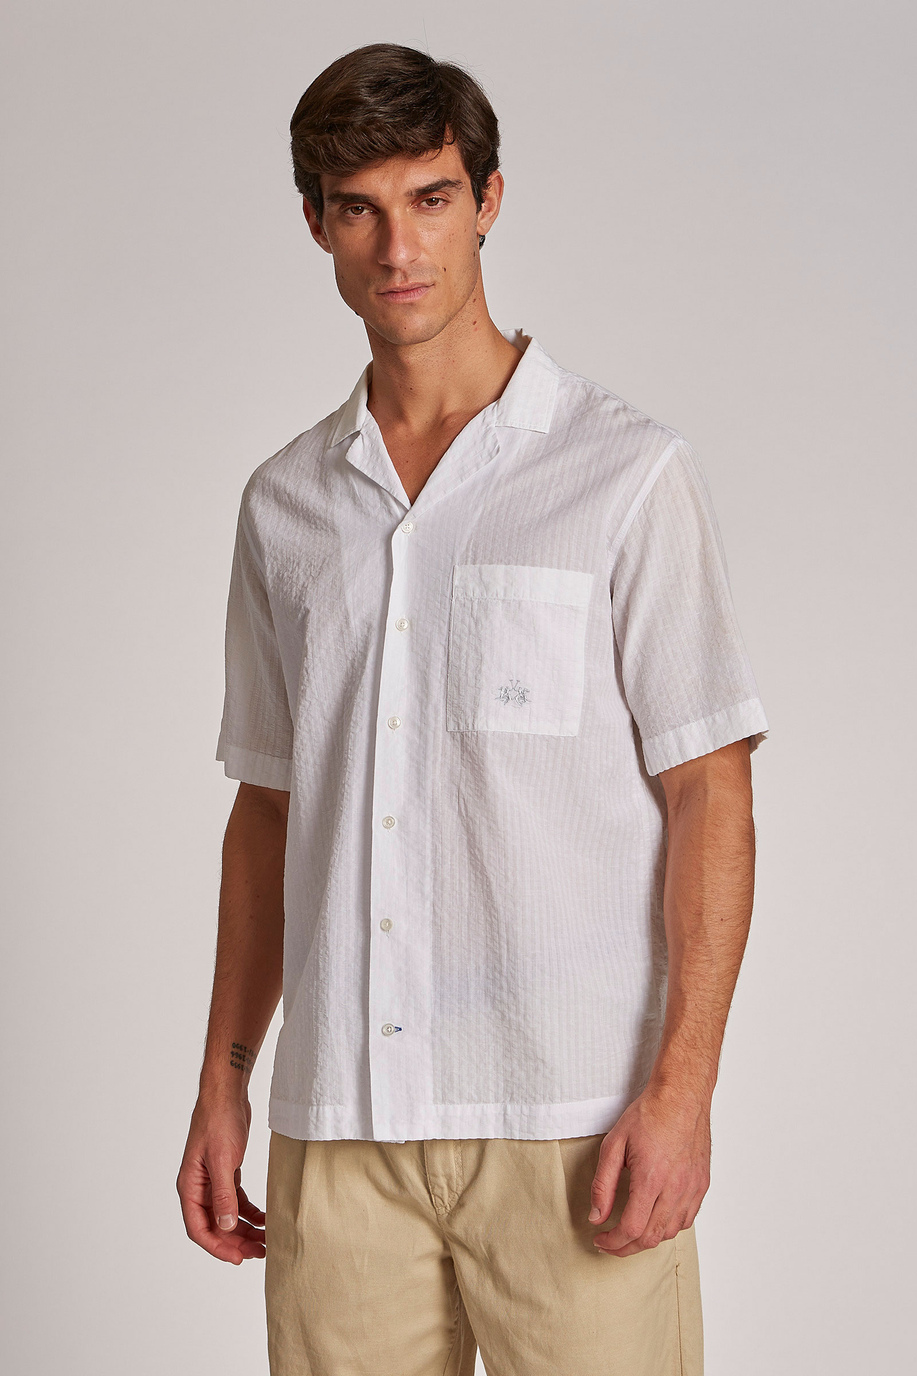 Men's short-sleeved, regular-fit cotton shirt - Summer must-haves | La Martina - Official Online Shop